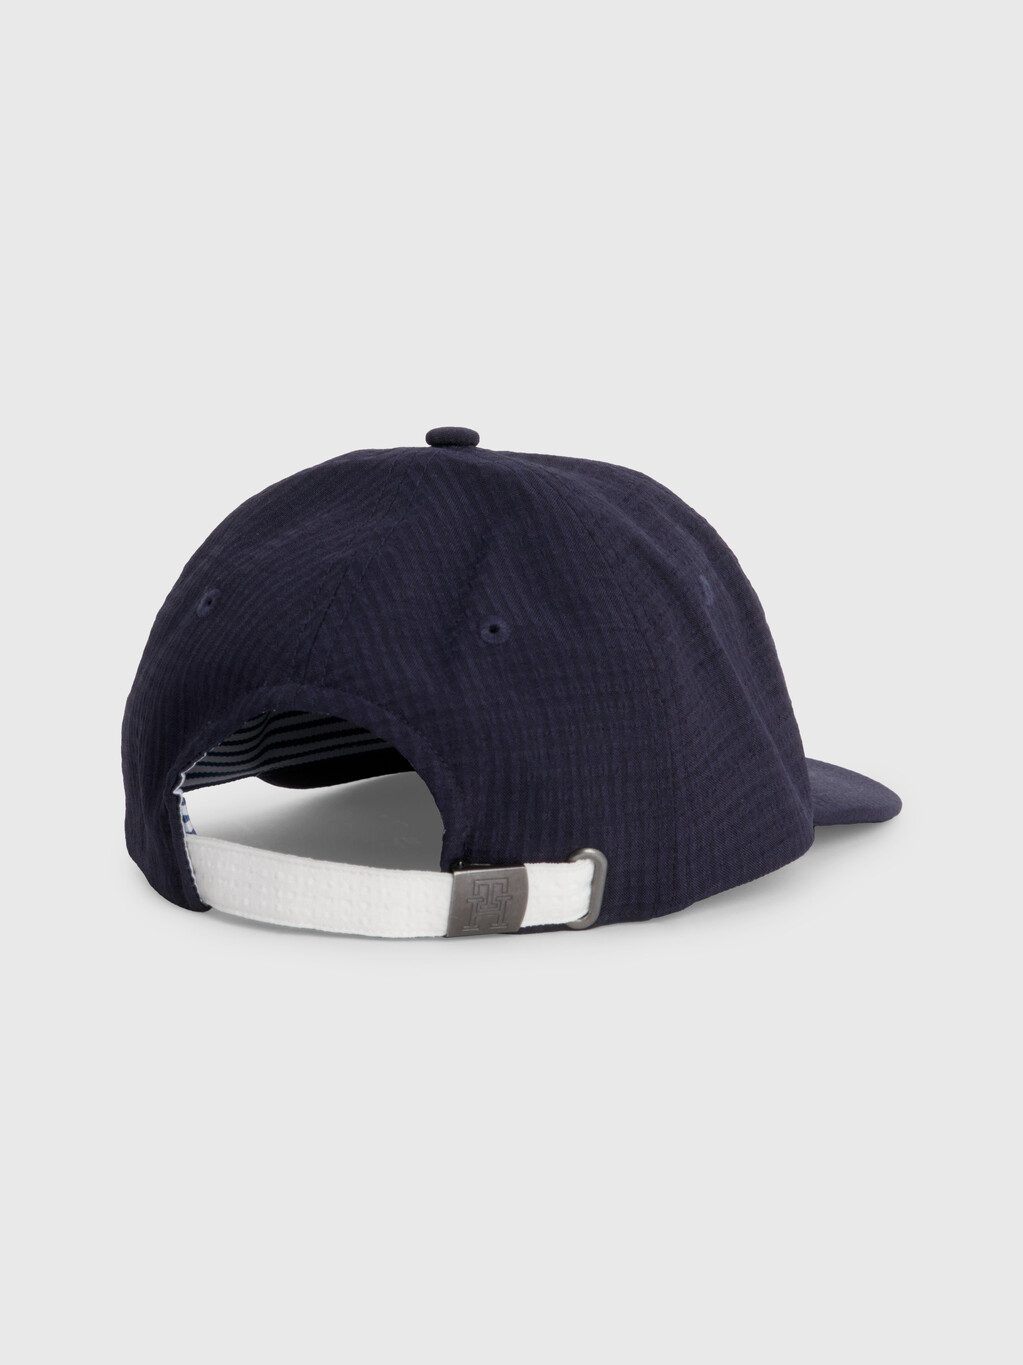 紋理 Monogram 刺繡棒球帽, Space Blue, hi-res